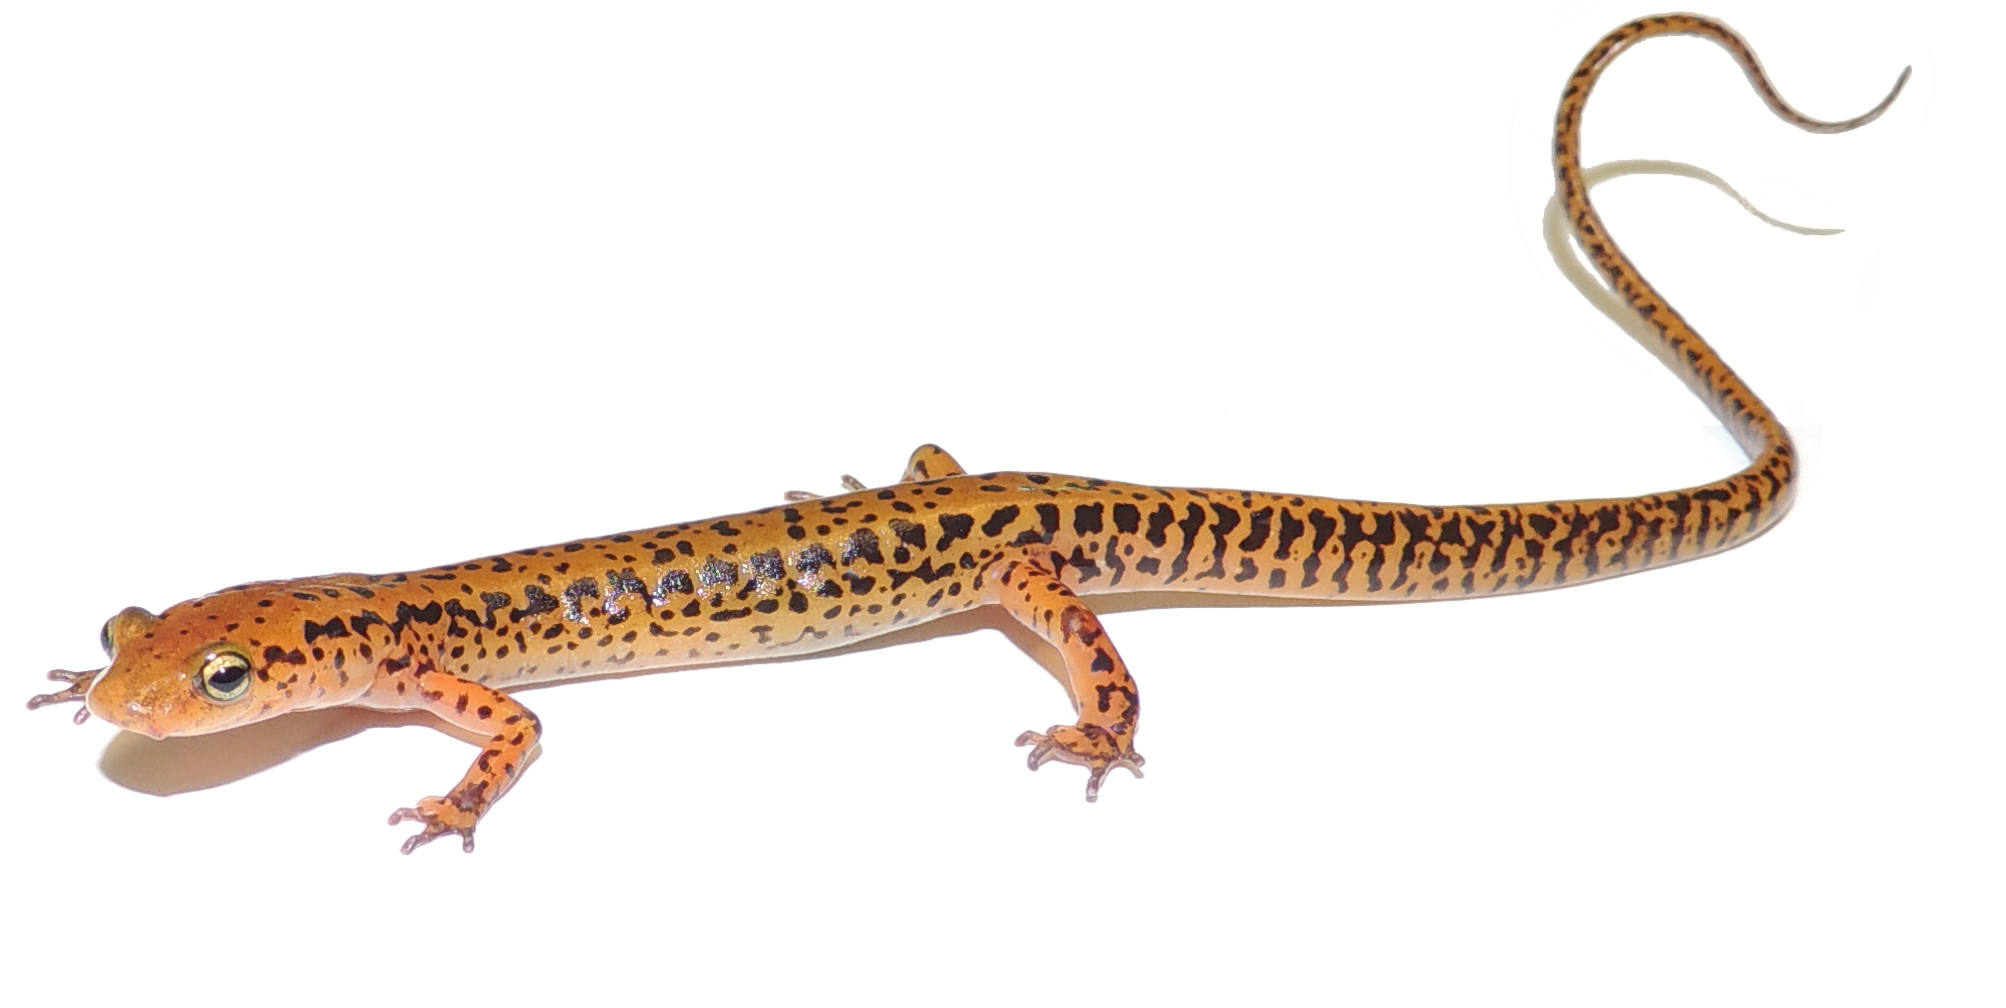 Eurycea longicauda (long-tailed salamander)